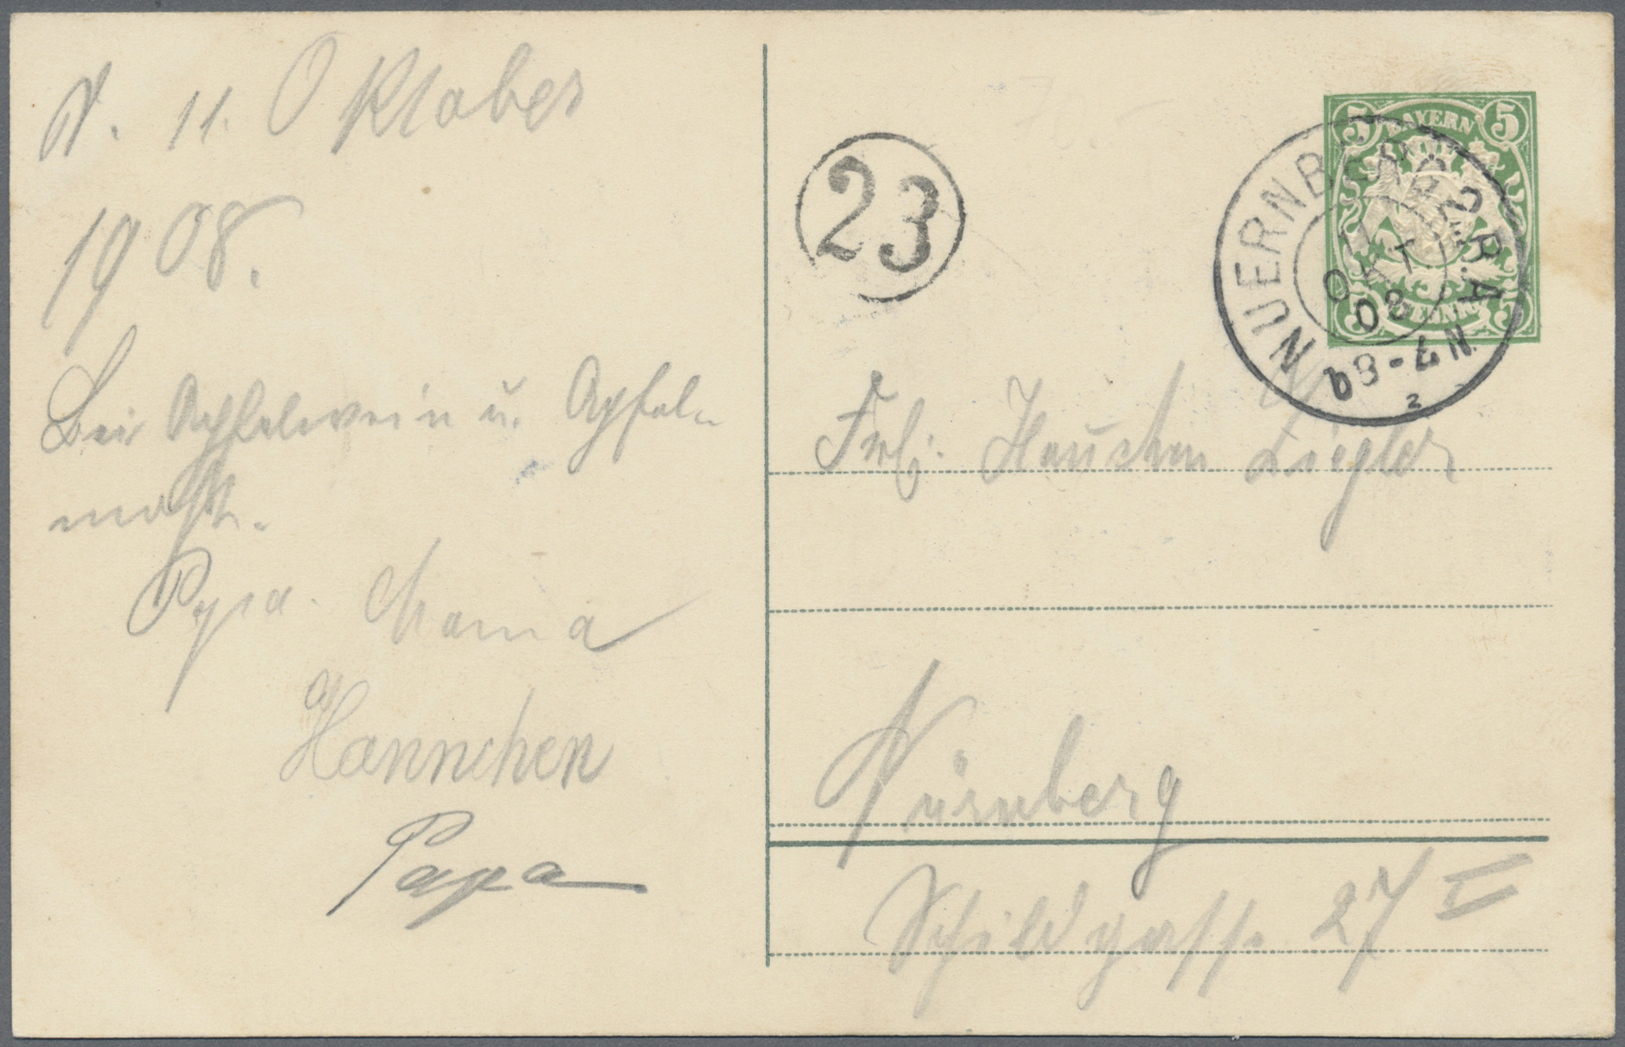 GA Thematik: Nahrung-Obst / Food-fruits: 1908, Bayern. Privat-Postkarte 5 Pf Wappen "Bayerische Landes-Obst-Ausstellung, - Food